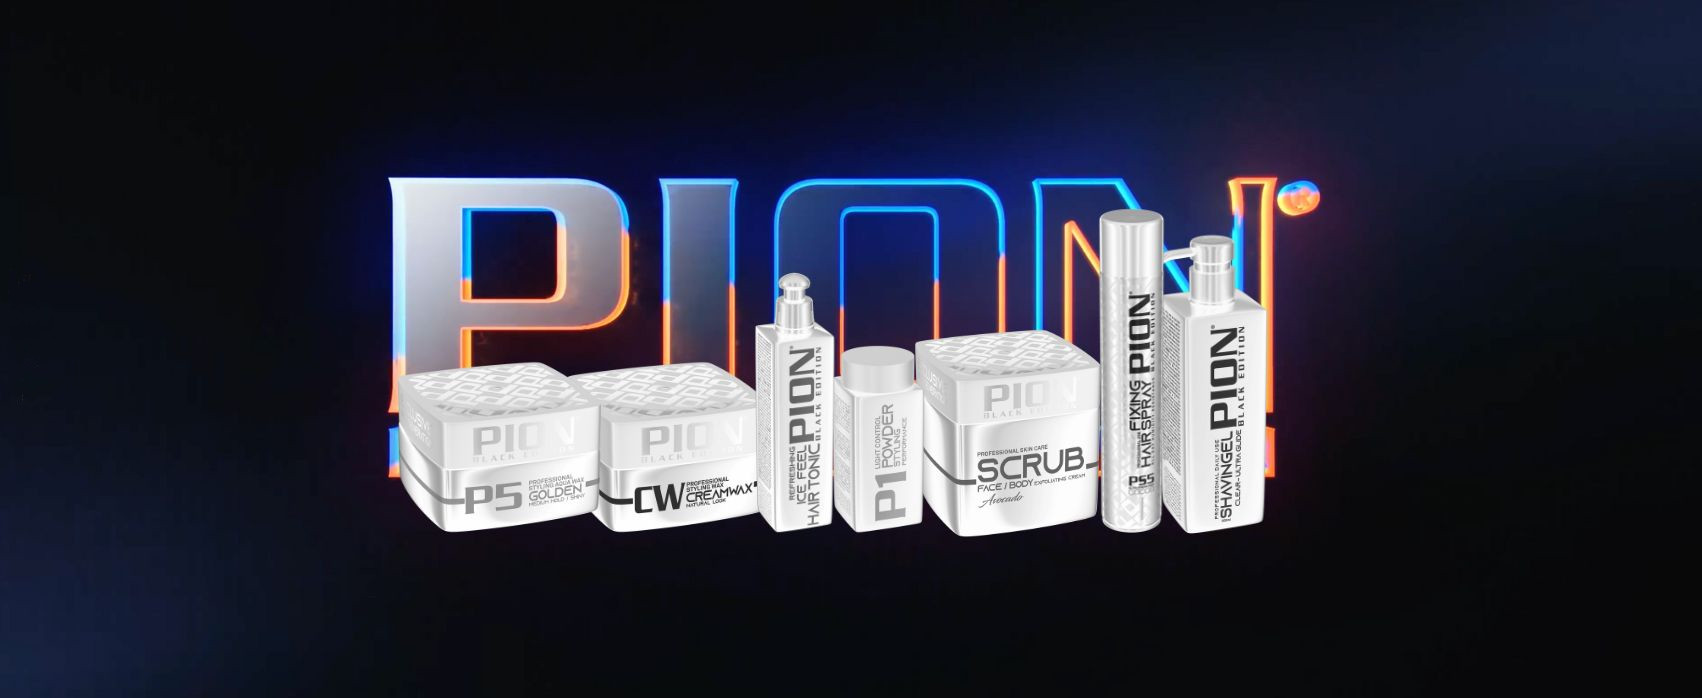 PION brand kadeřnická kosmetika slickstyle.cz